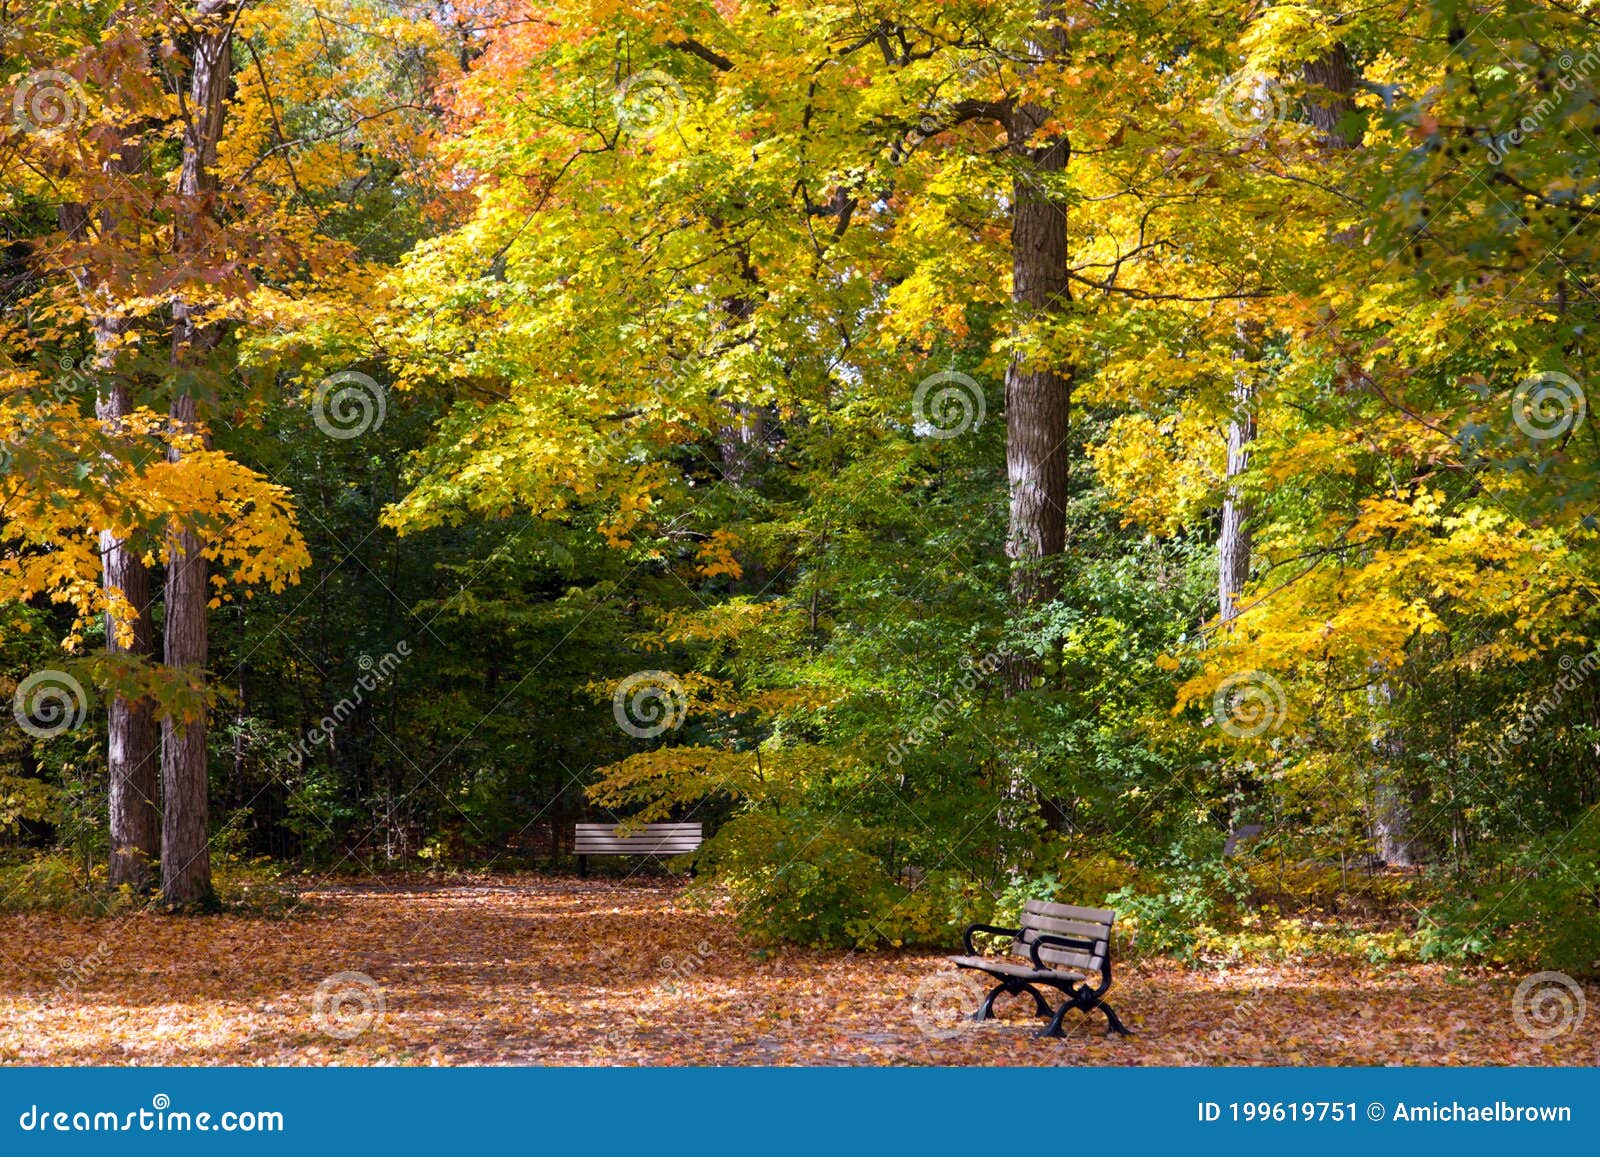 autumn leaves trees park stroll southwestern ontario